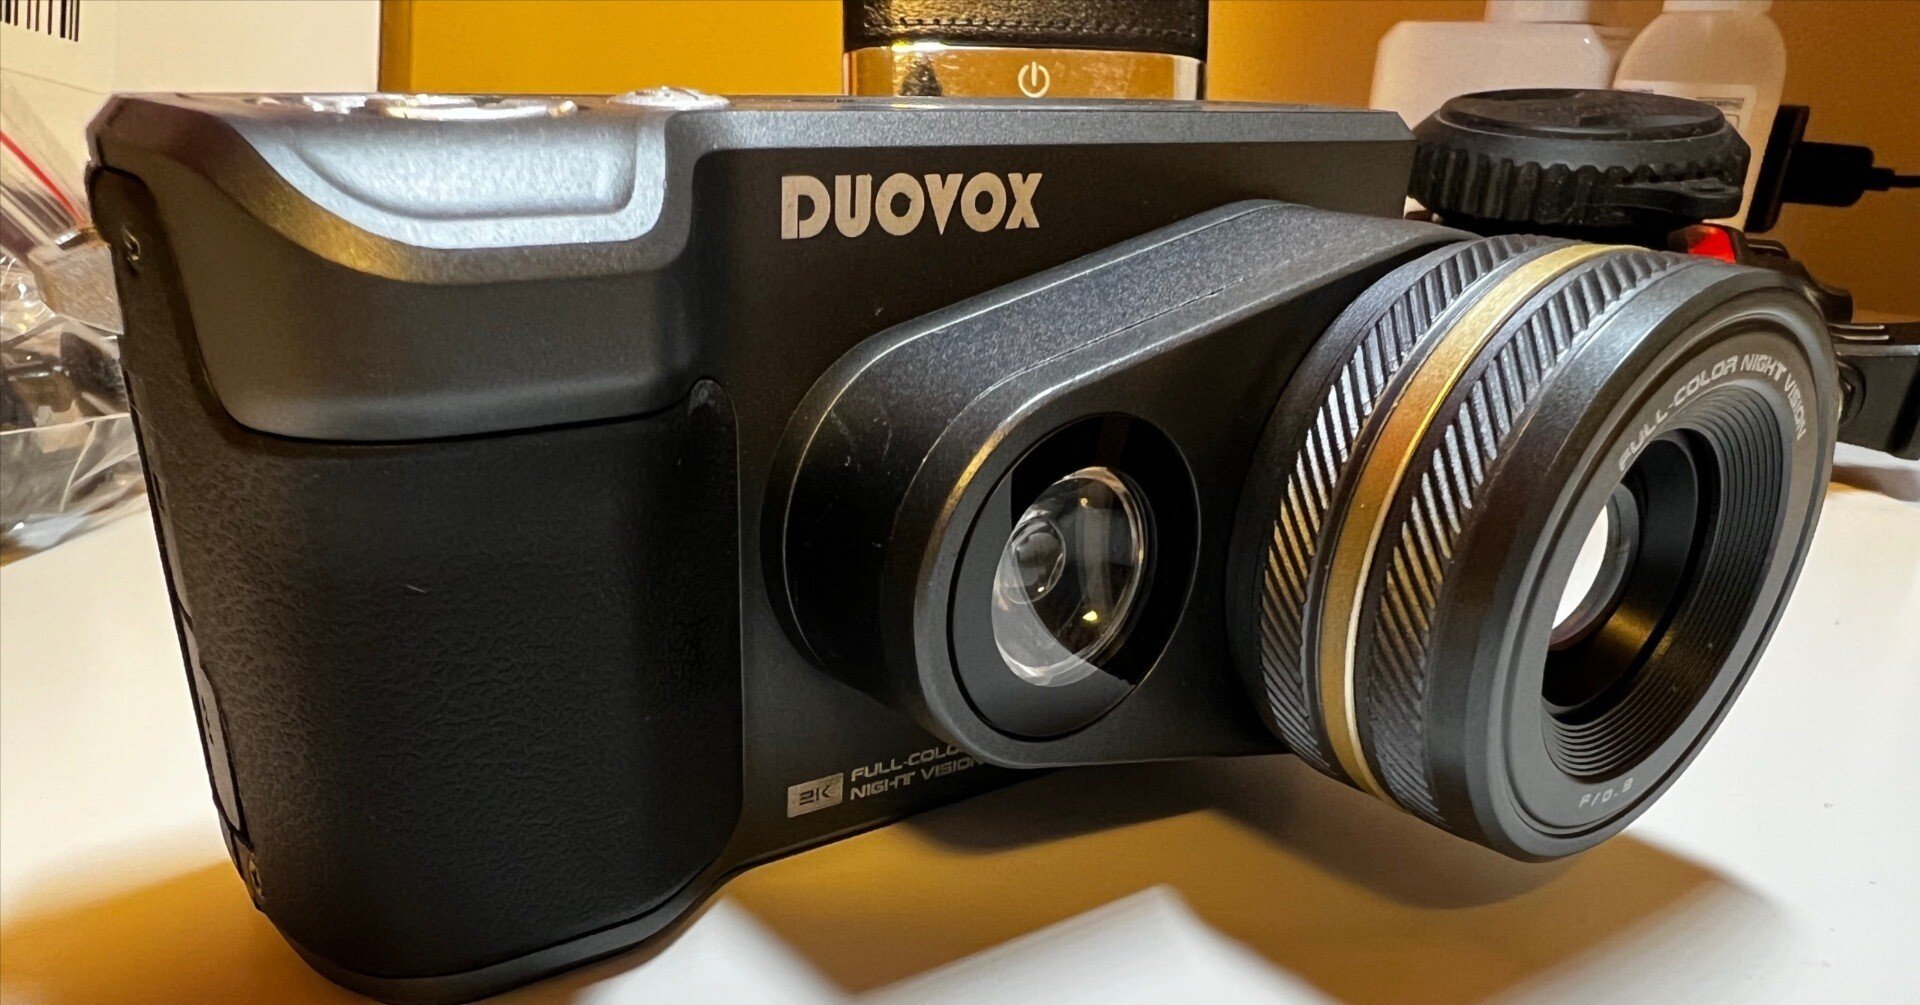 DUOVOX ナイトビジョン2K 暗視カメラ - ビデオカメラ